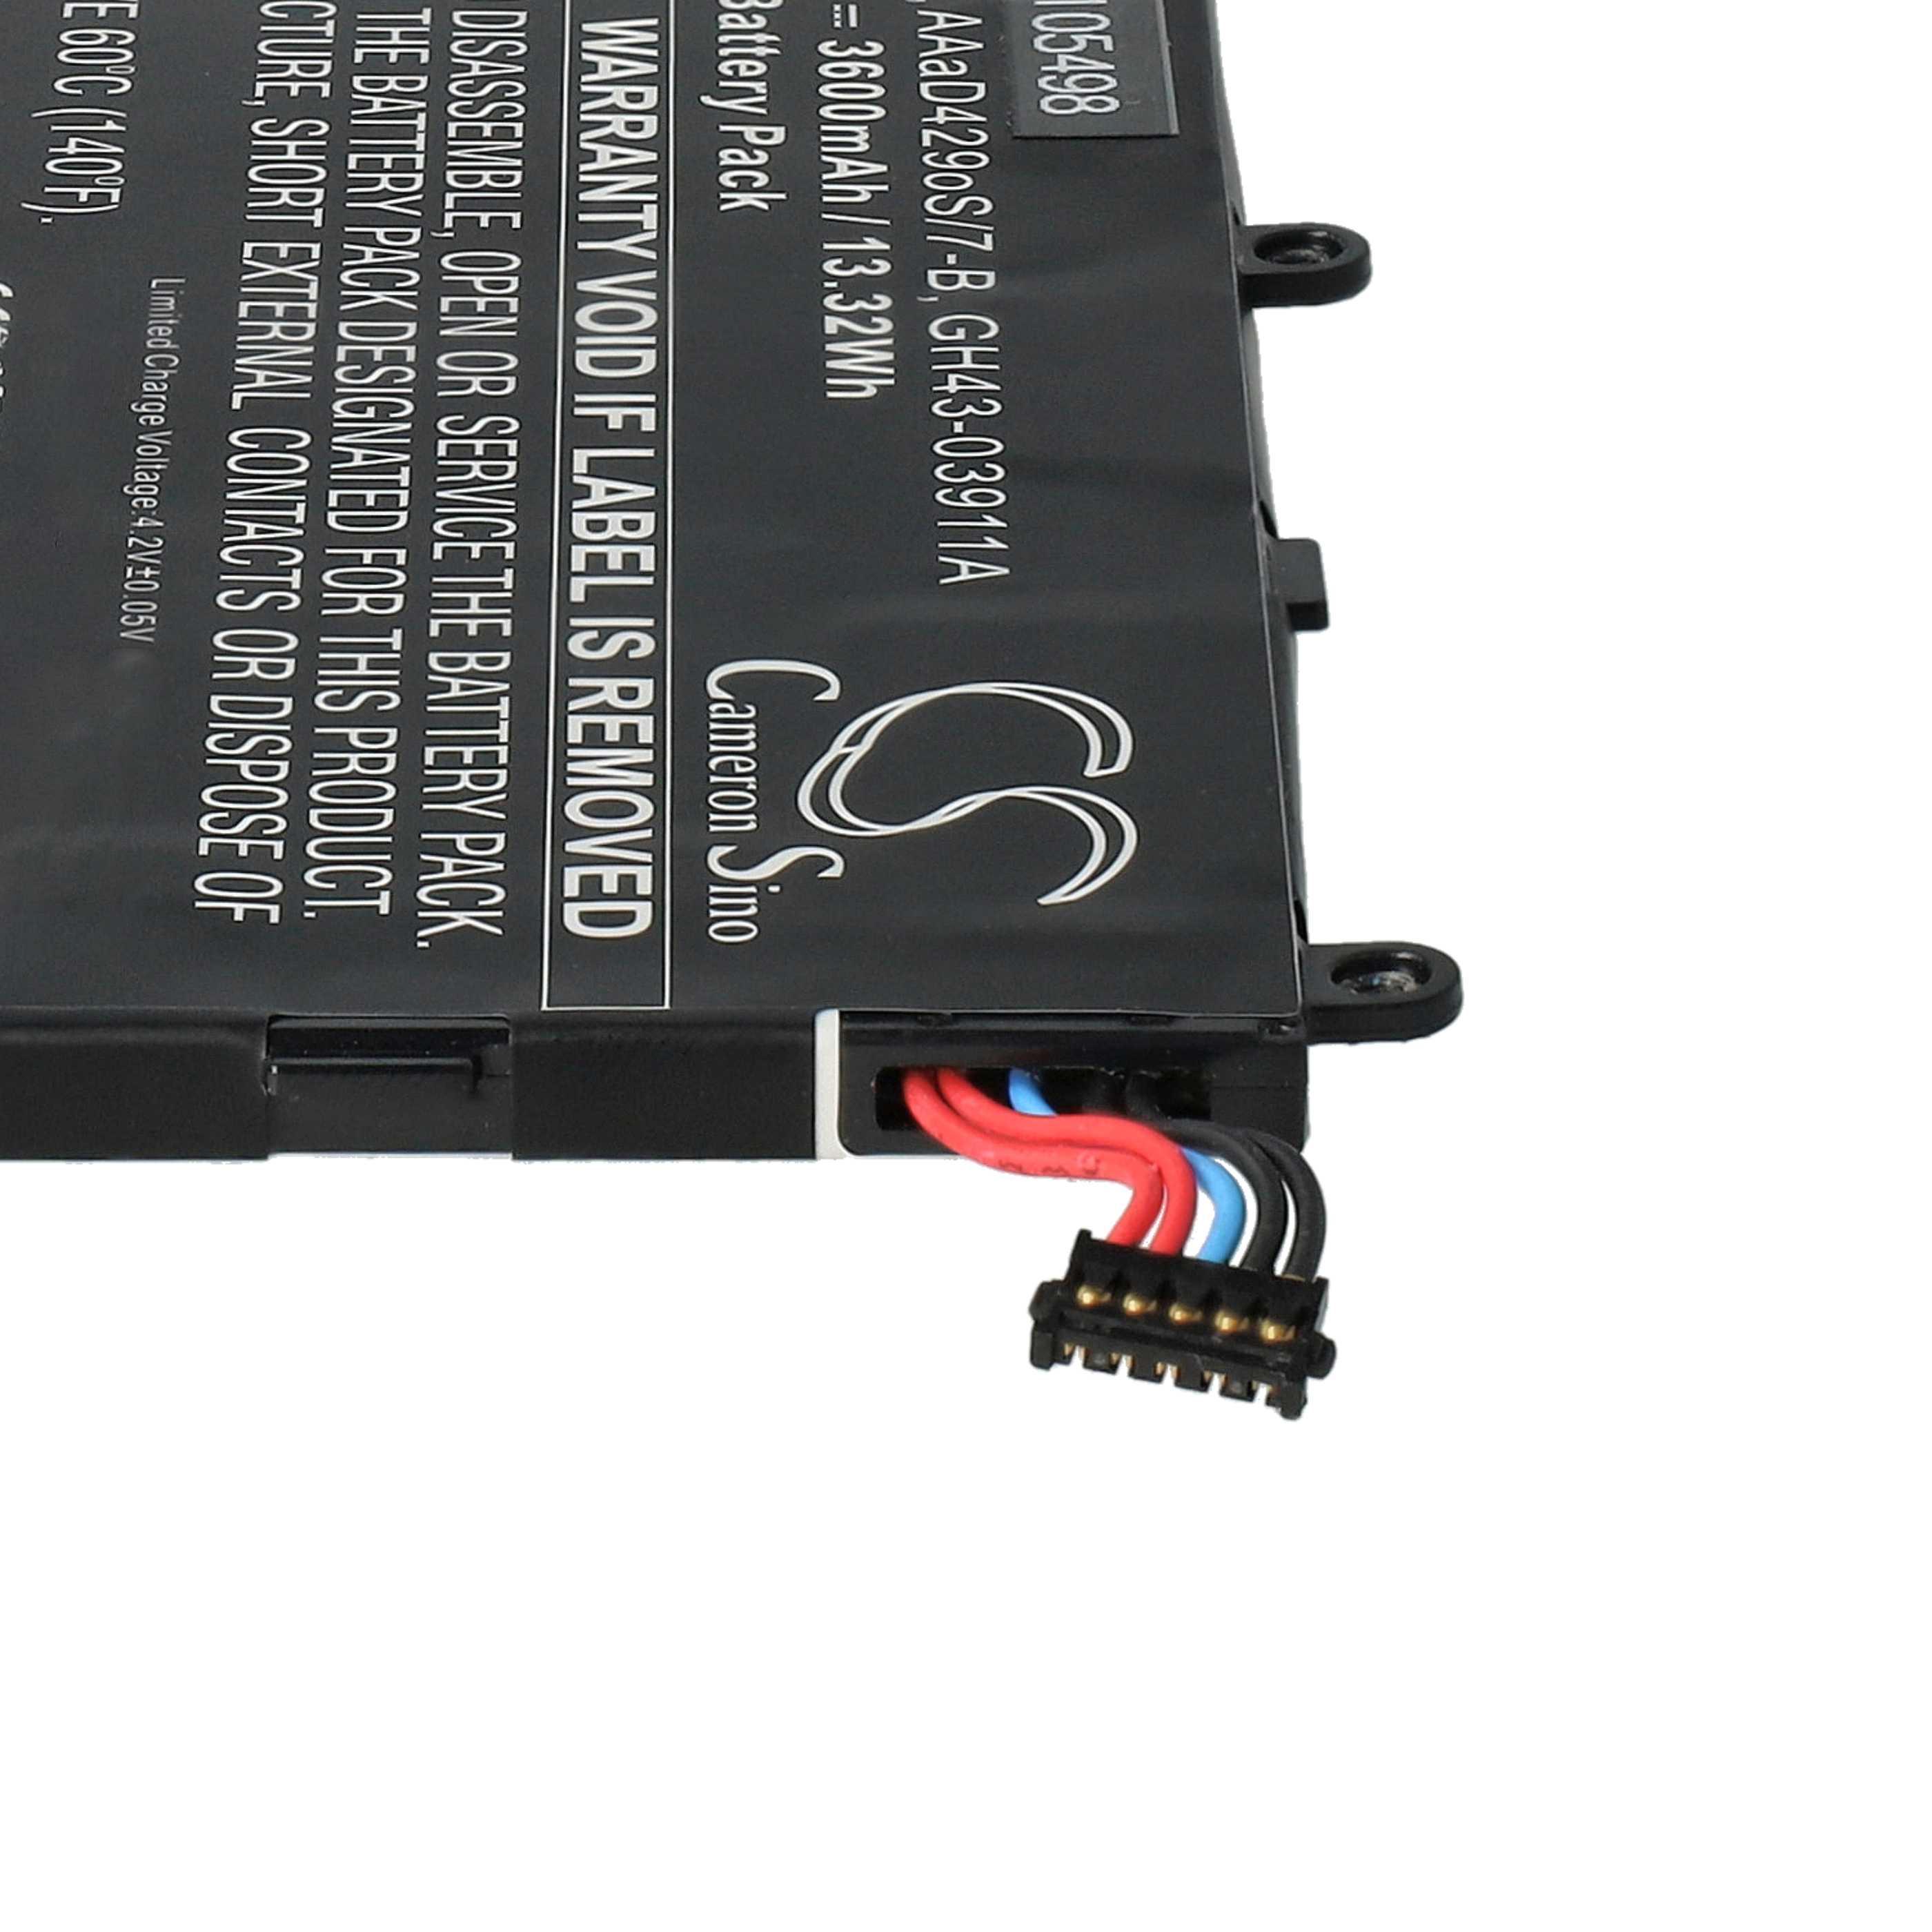 Batterie remplace Samsung AAaD429oS/7-B, T4000E pour tablette - 3600mAh 3,7V Li-polymère